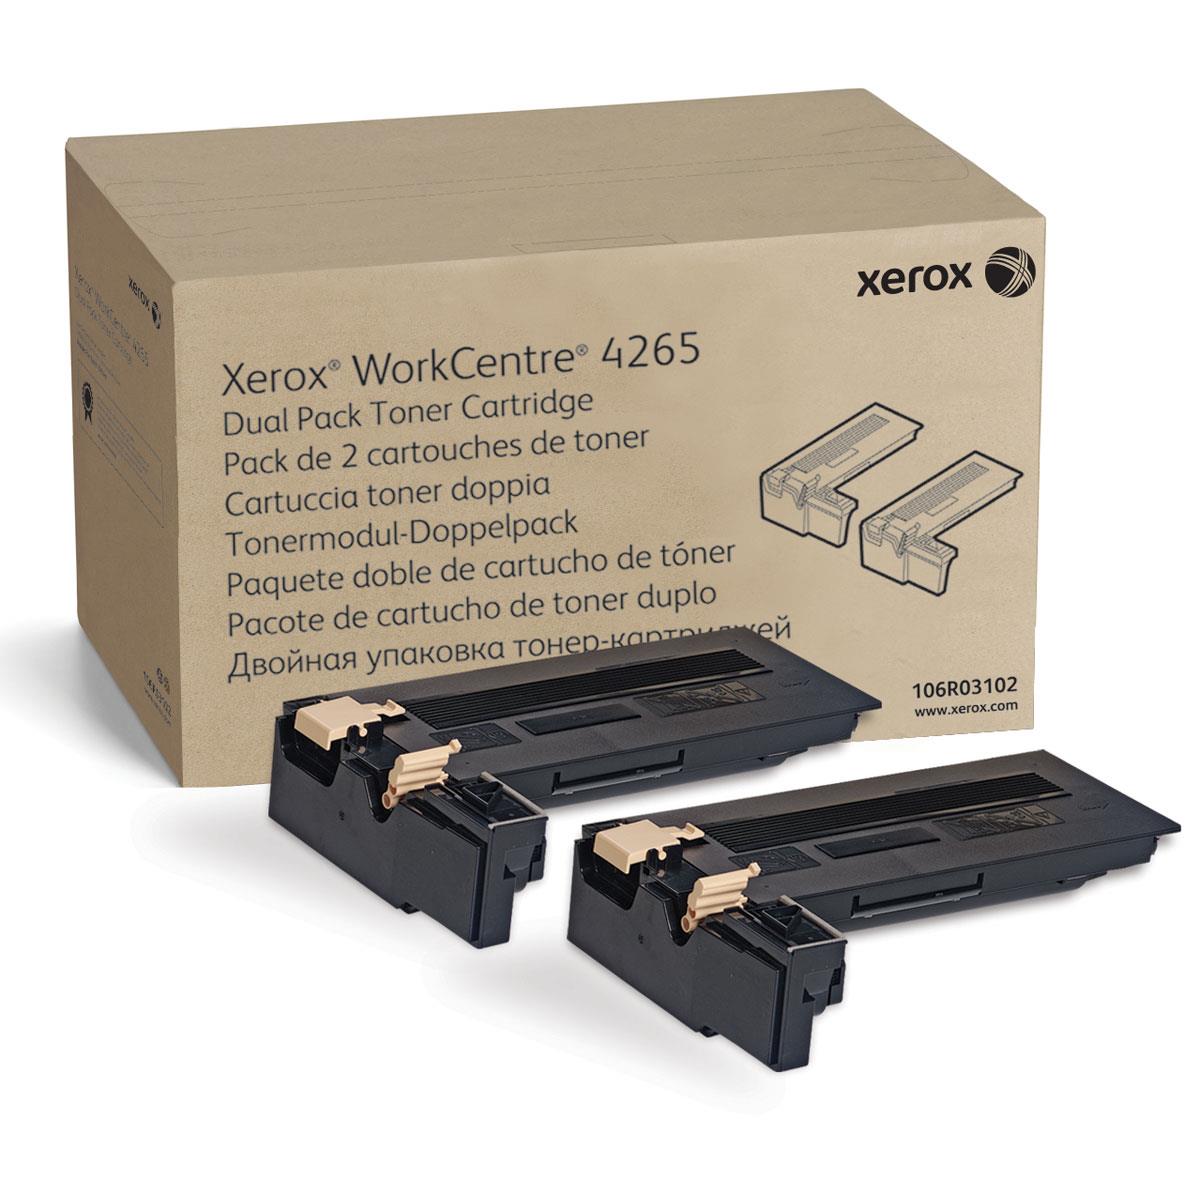 

Xerox Extra High Capacity Black Toner Cartridge for WorkCentre 4265 Printer